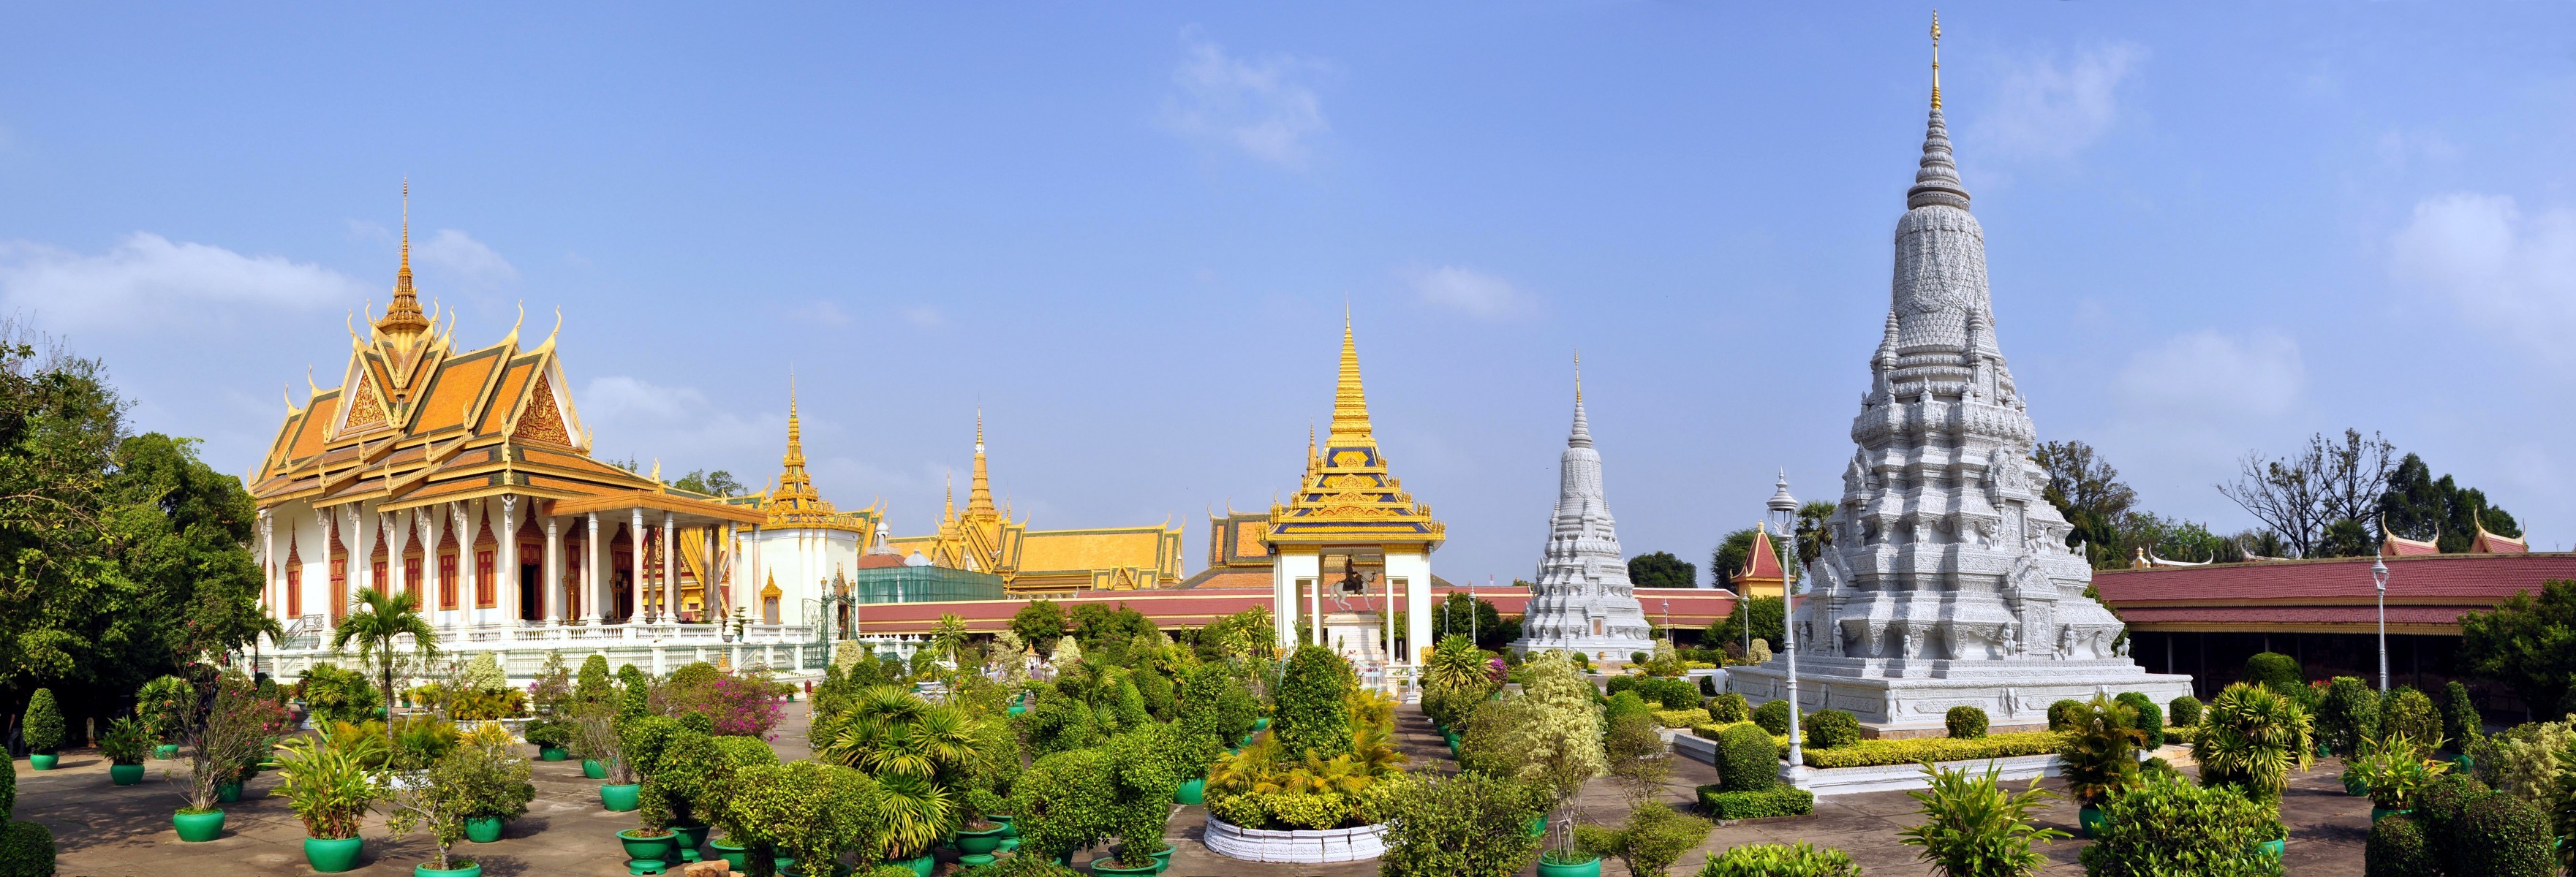 Royal Palace - Phnom Penh - Cambodia